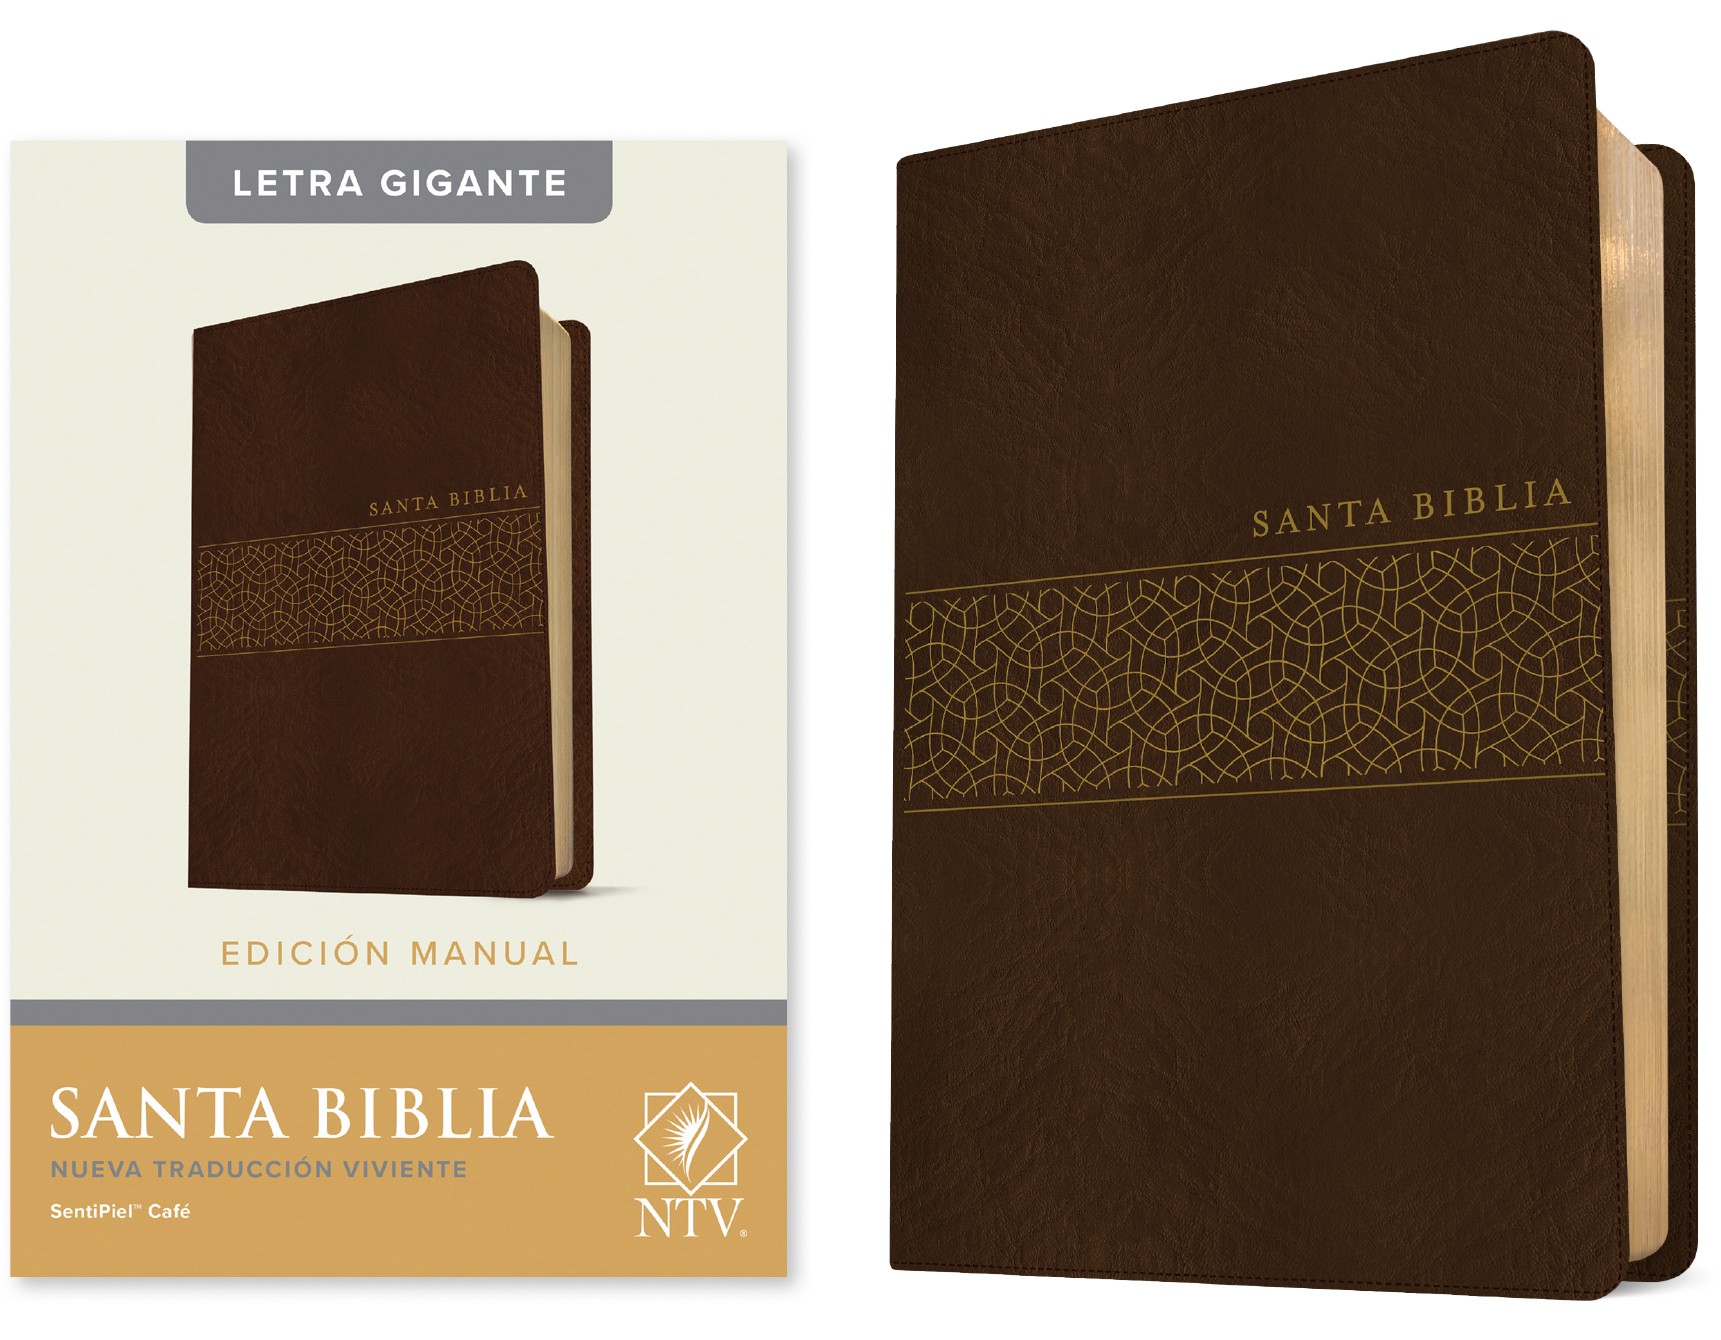  Santa Biblia NTV, Edición manual, letra gigante (Letra Roja, SentiPiel, Café)